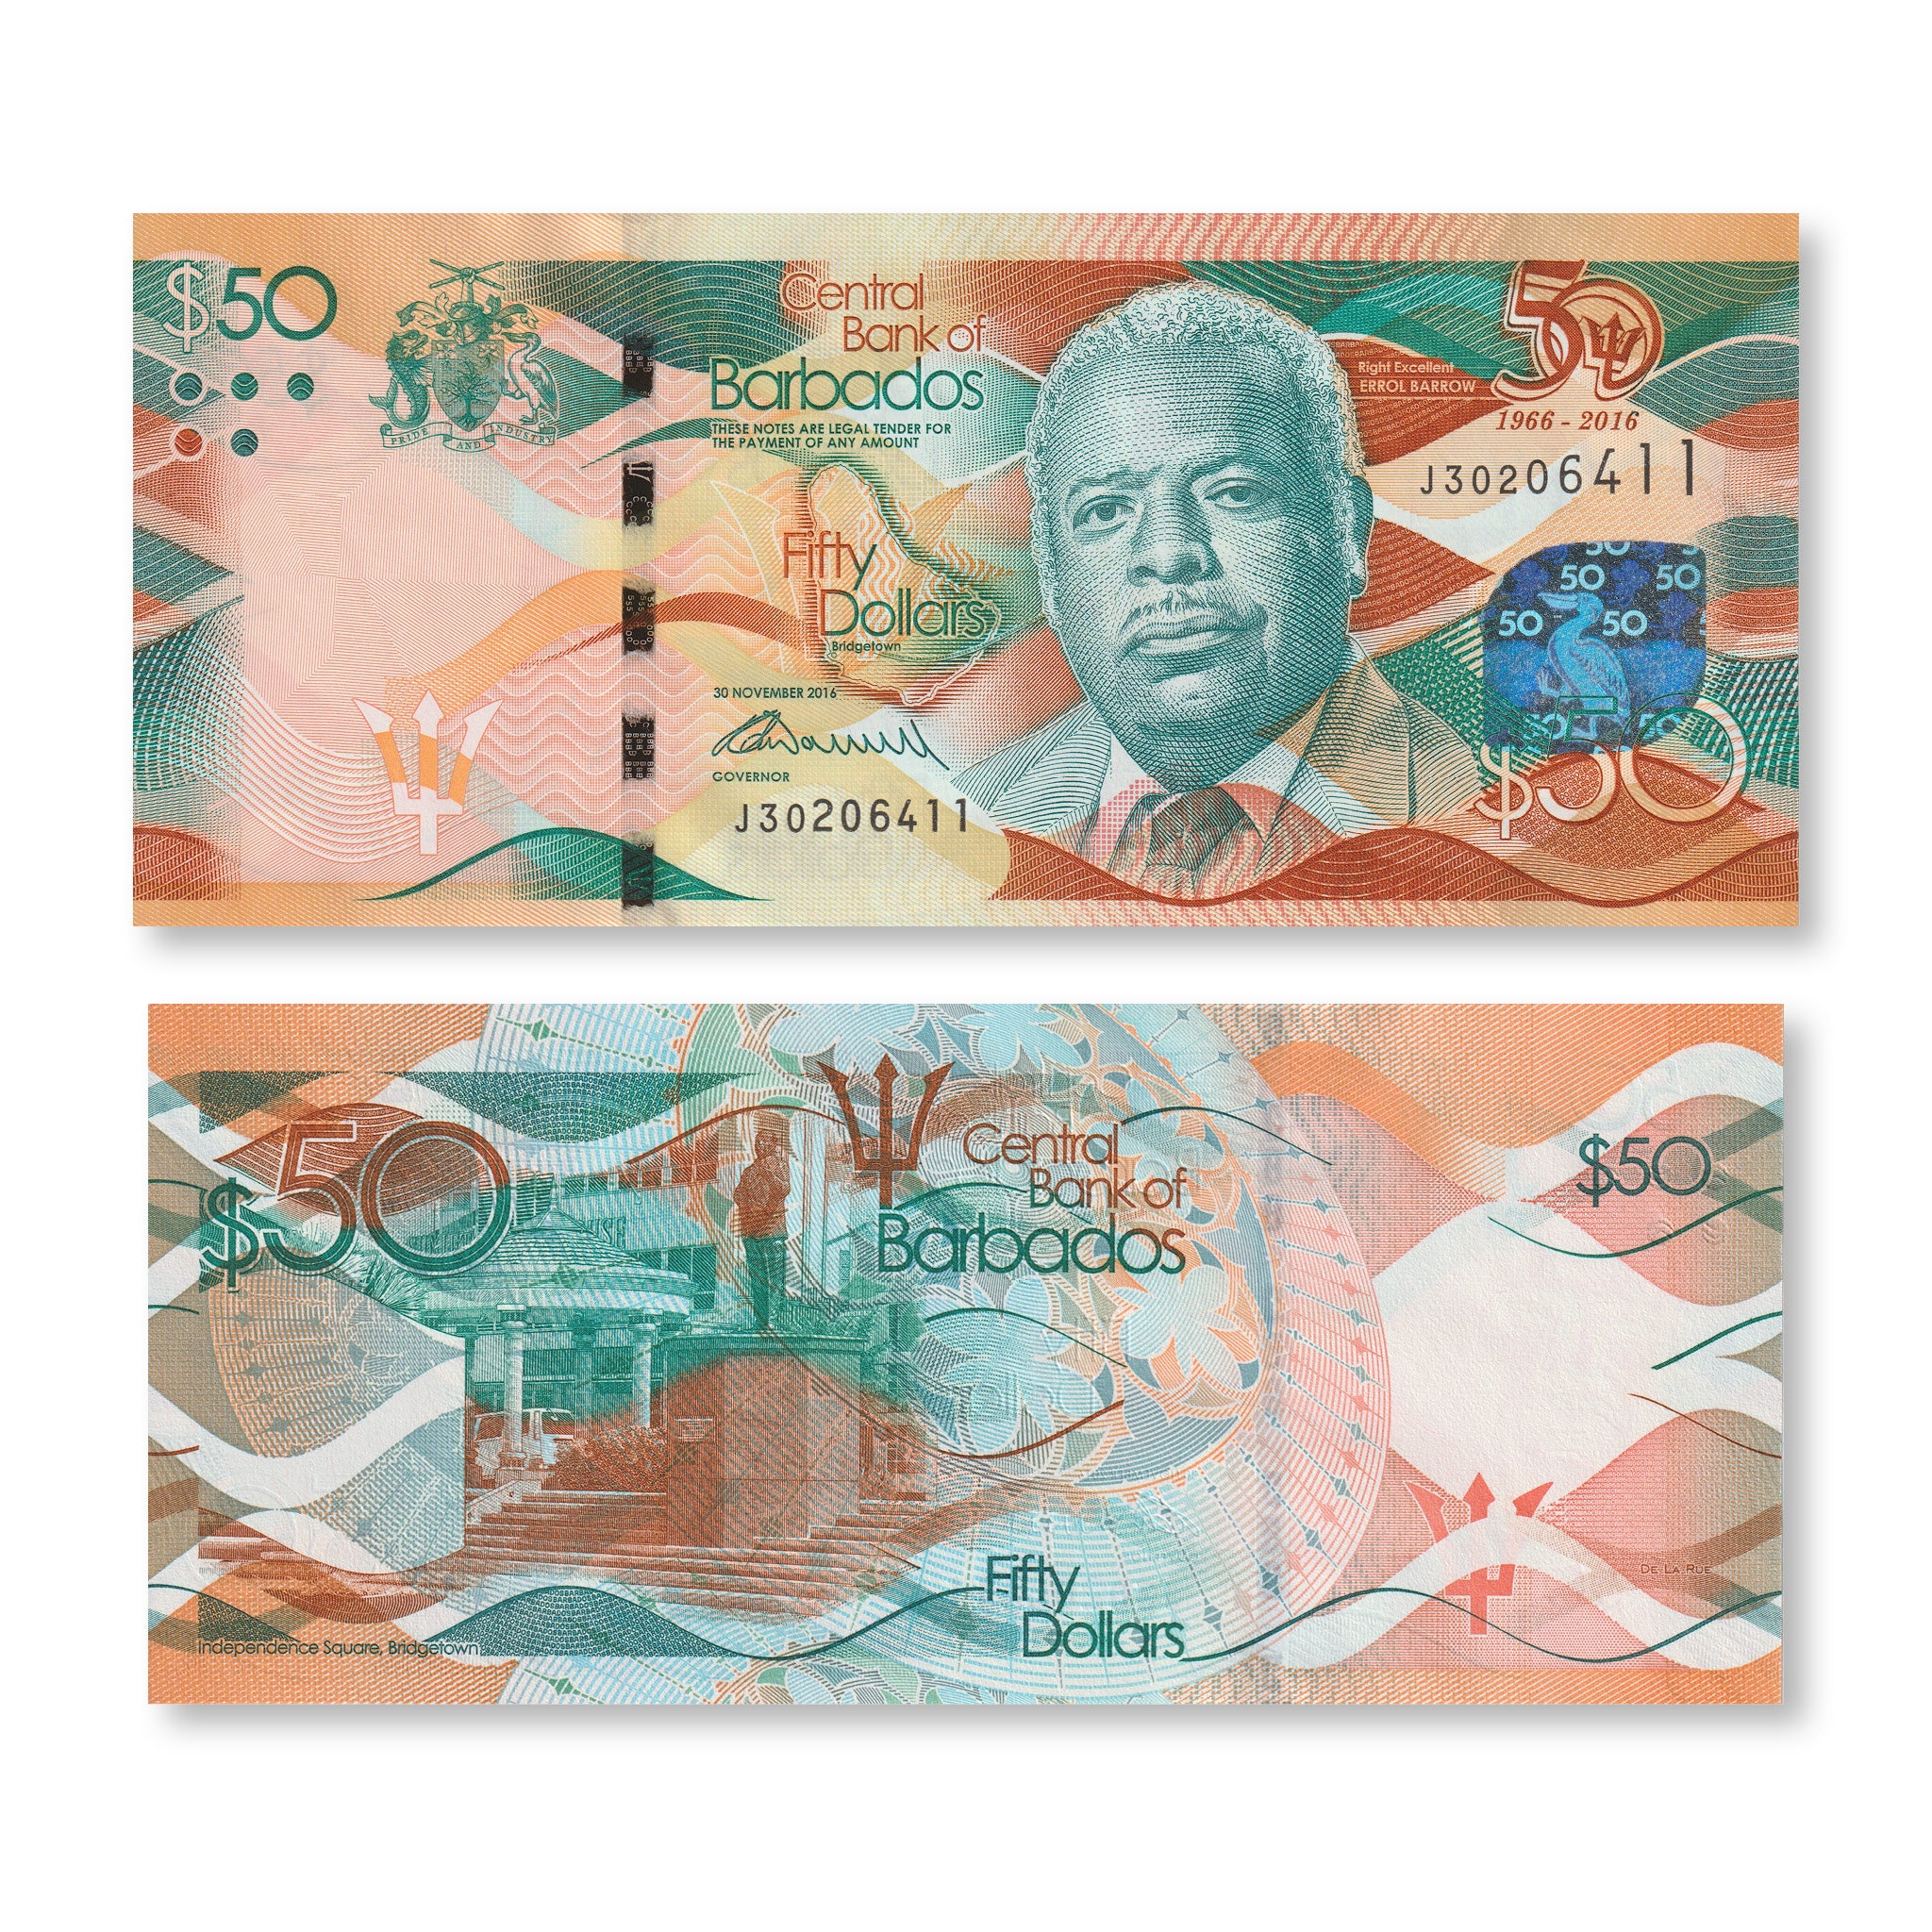 Barbados 50 Dollars, 2016, B238a, P79, UNC - Robert's World Money - World Banknotes